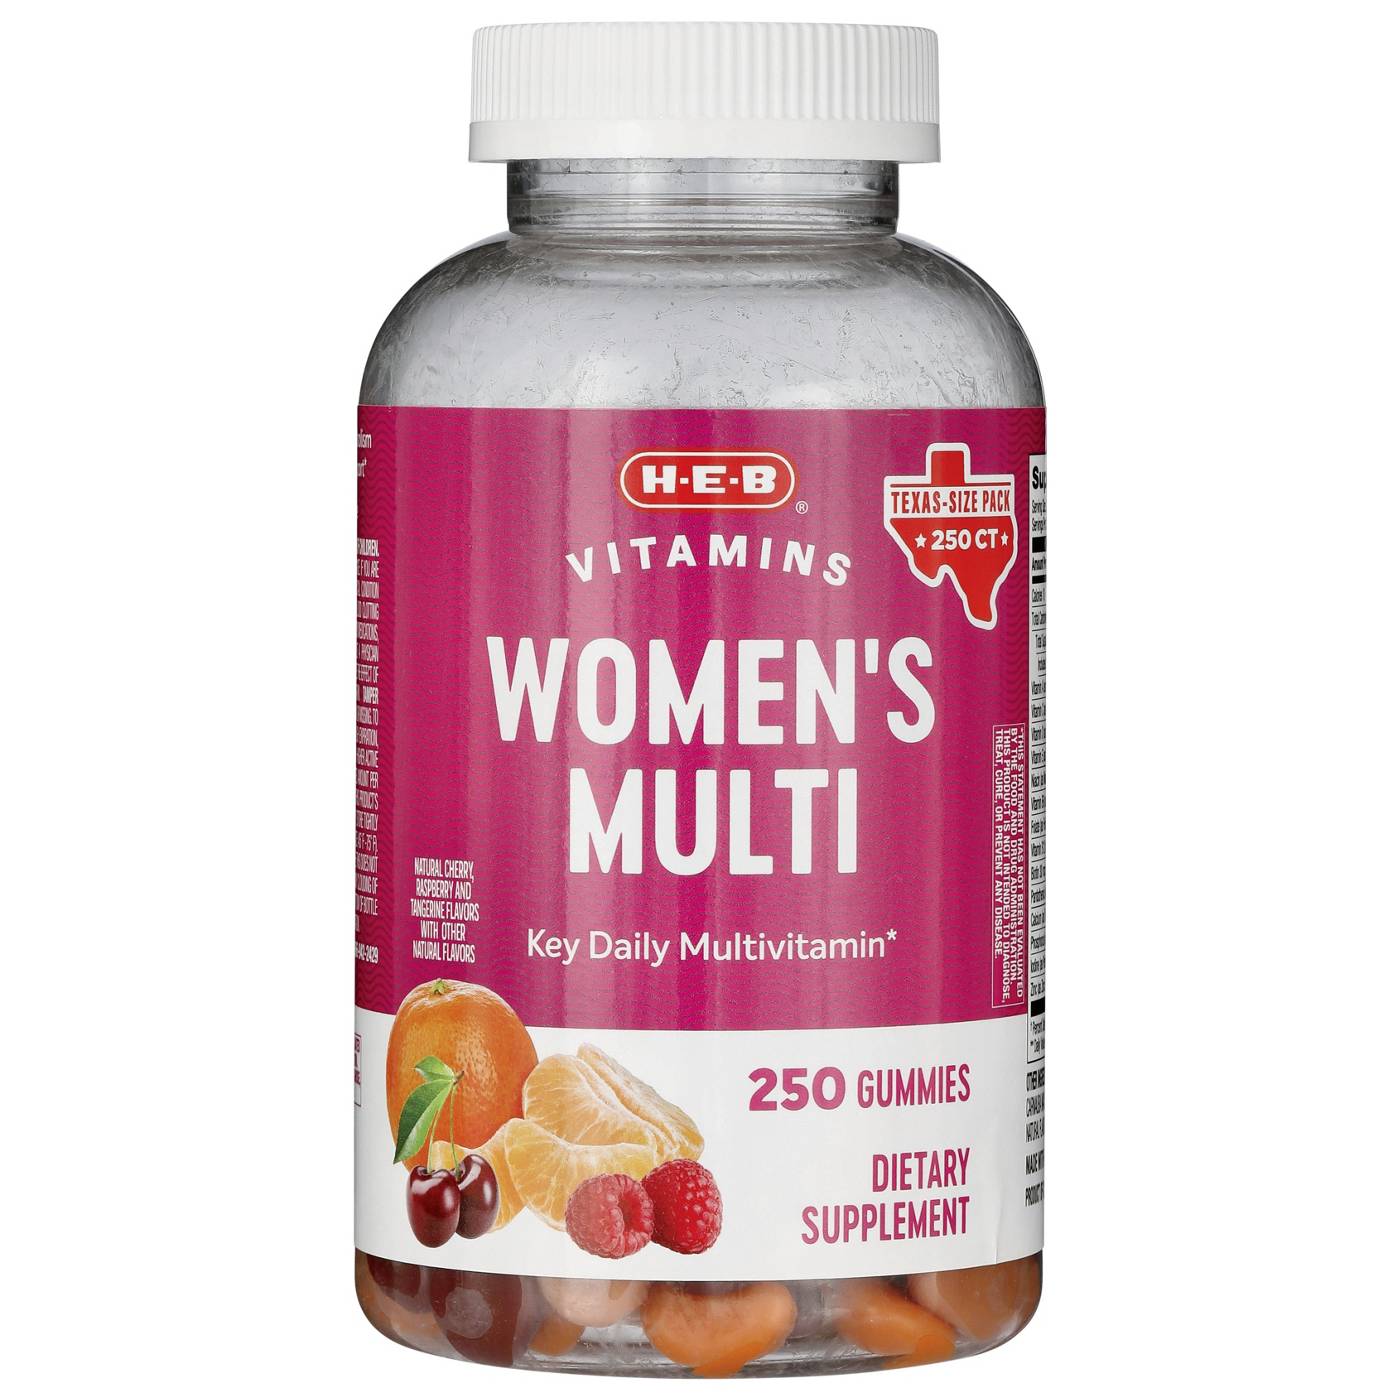 H-E-B Women's Multivitamin Gummies - Texas-Size Pack; image 1 of 2